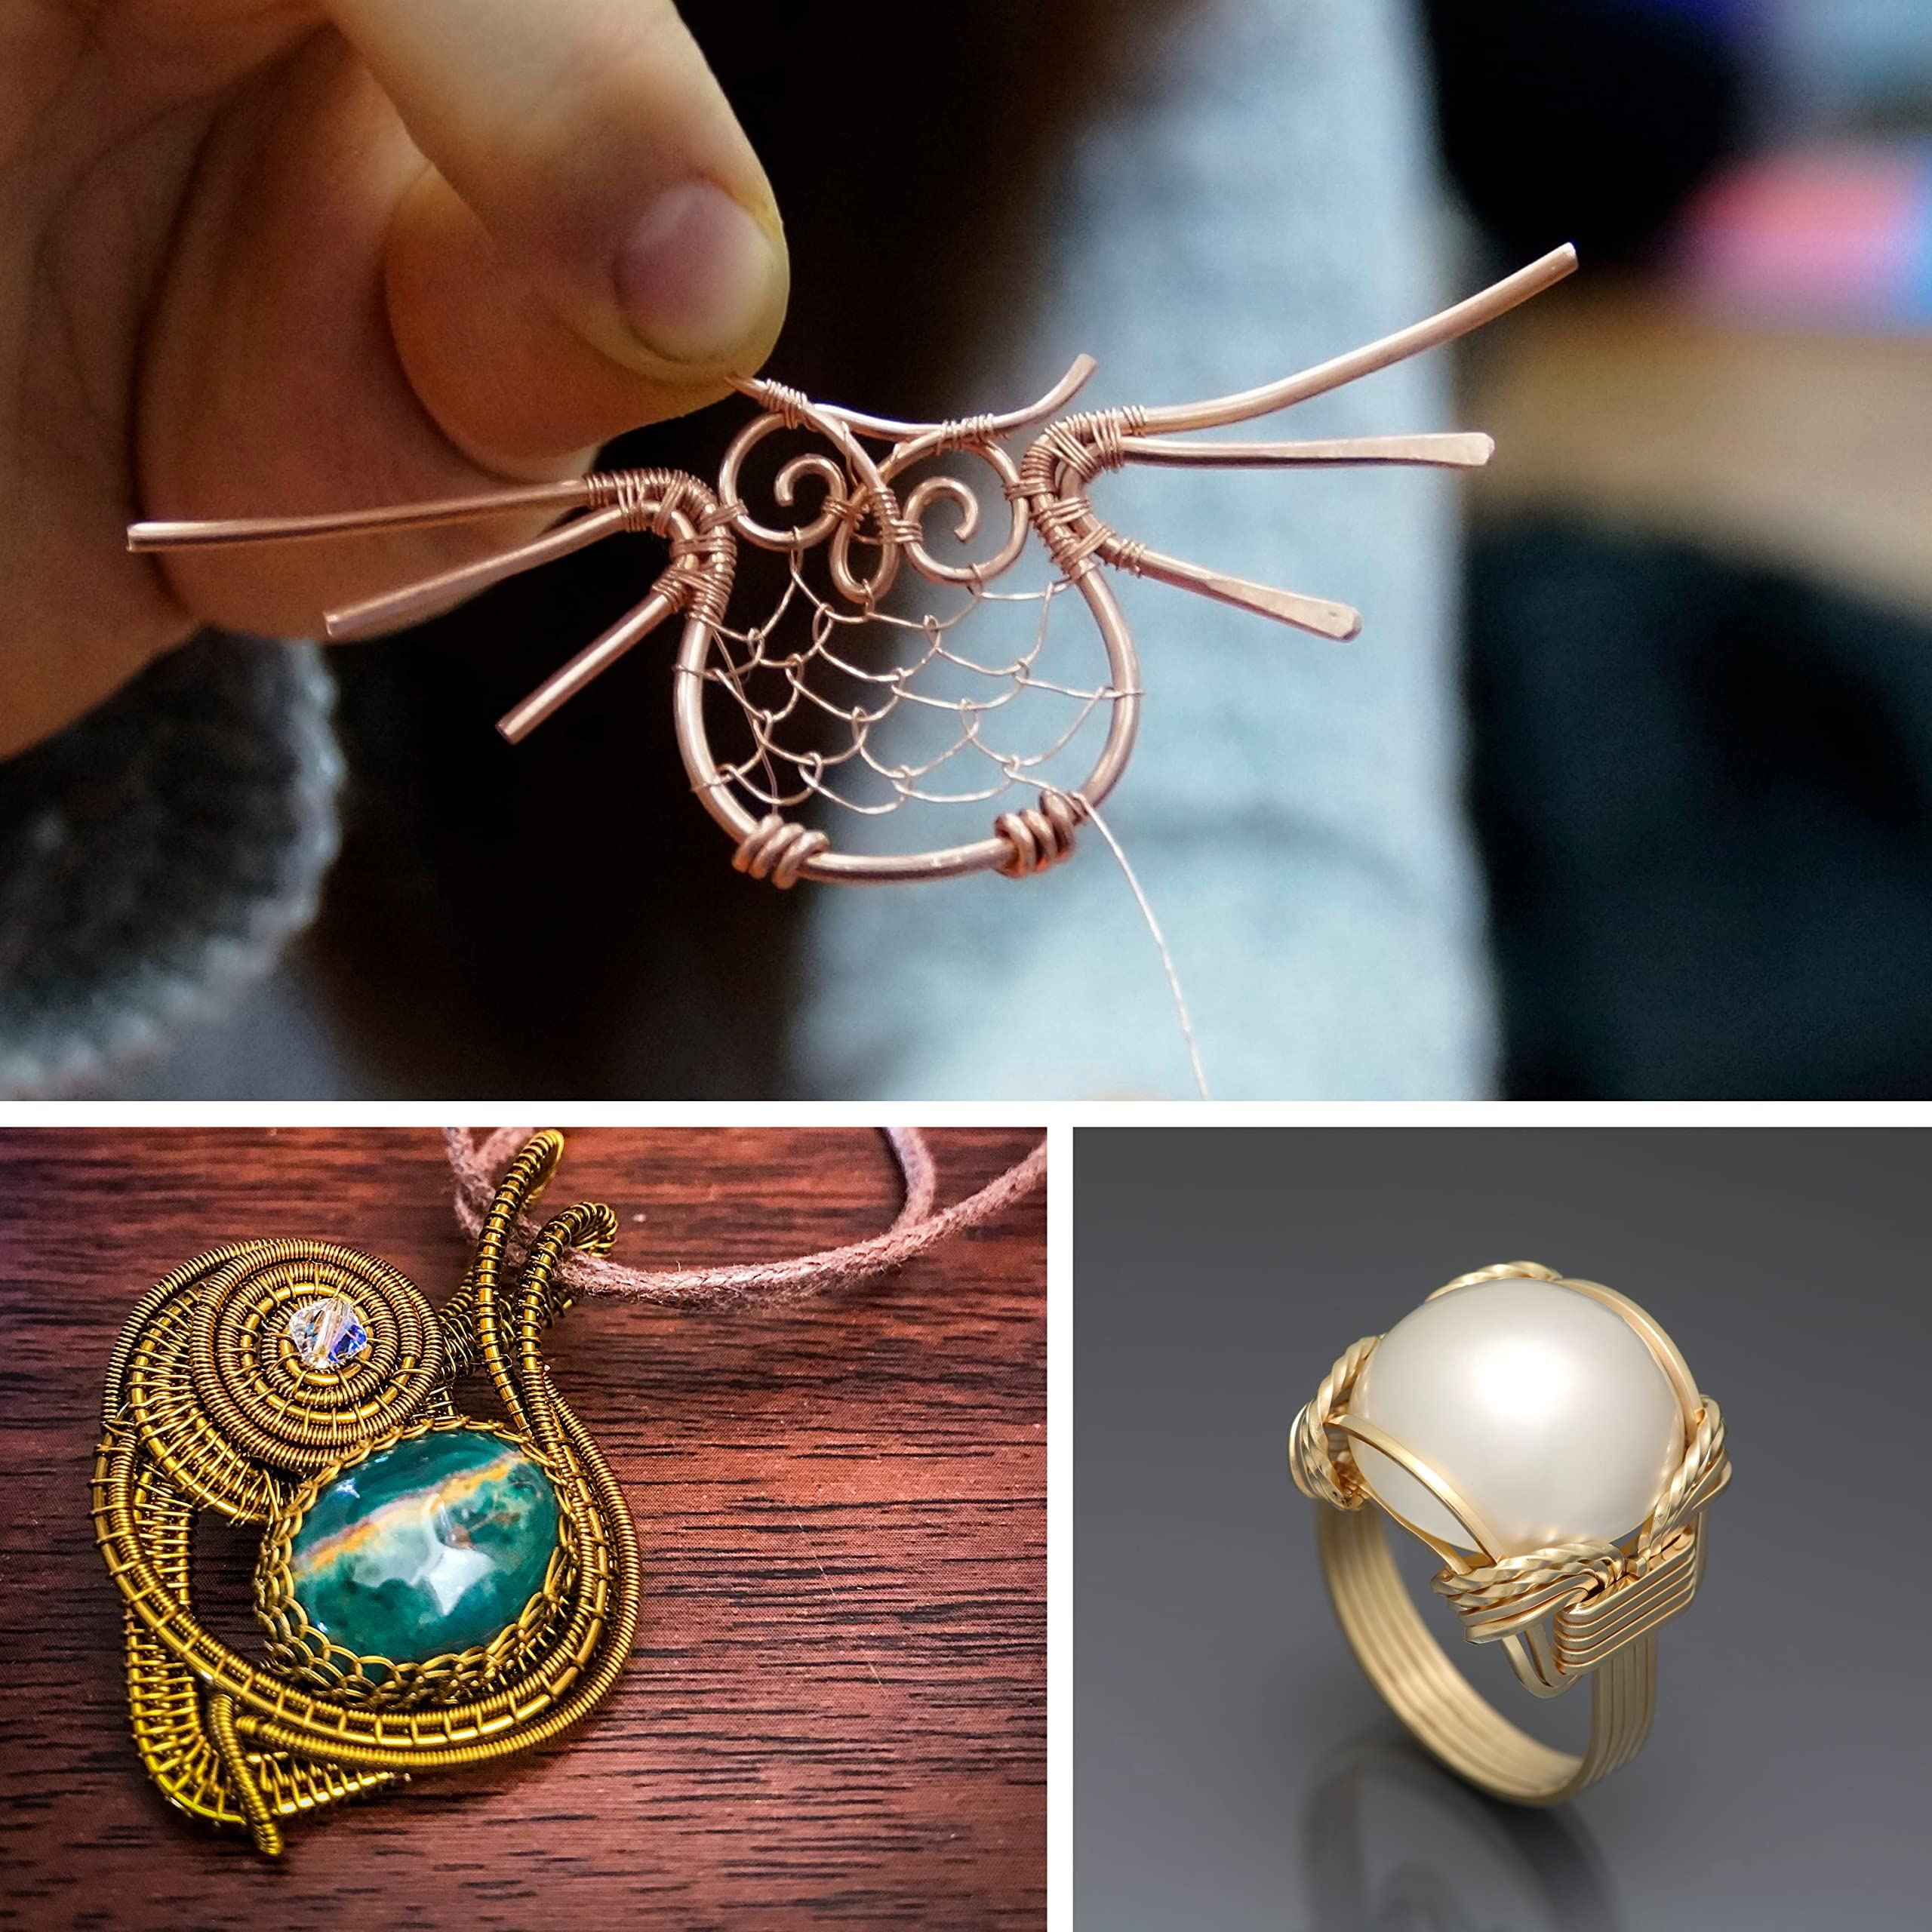  Teaaha 600 PCS Crimp Beads for Jewelry Making